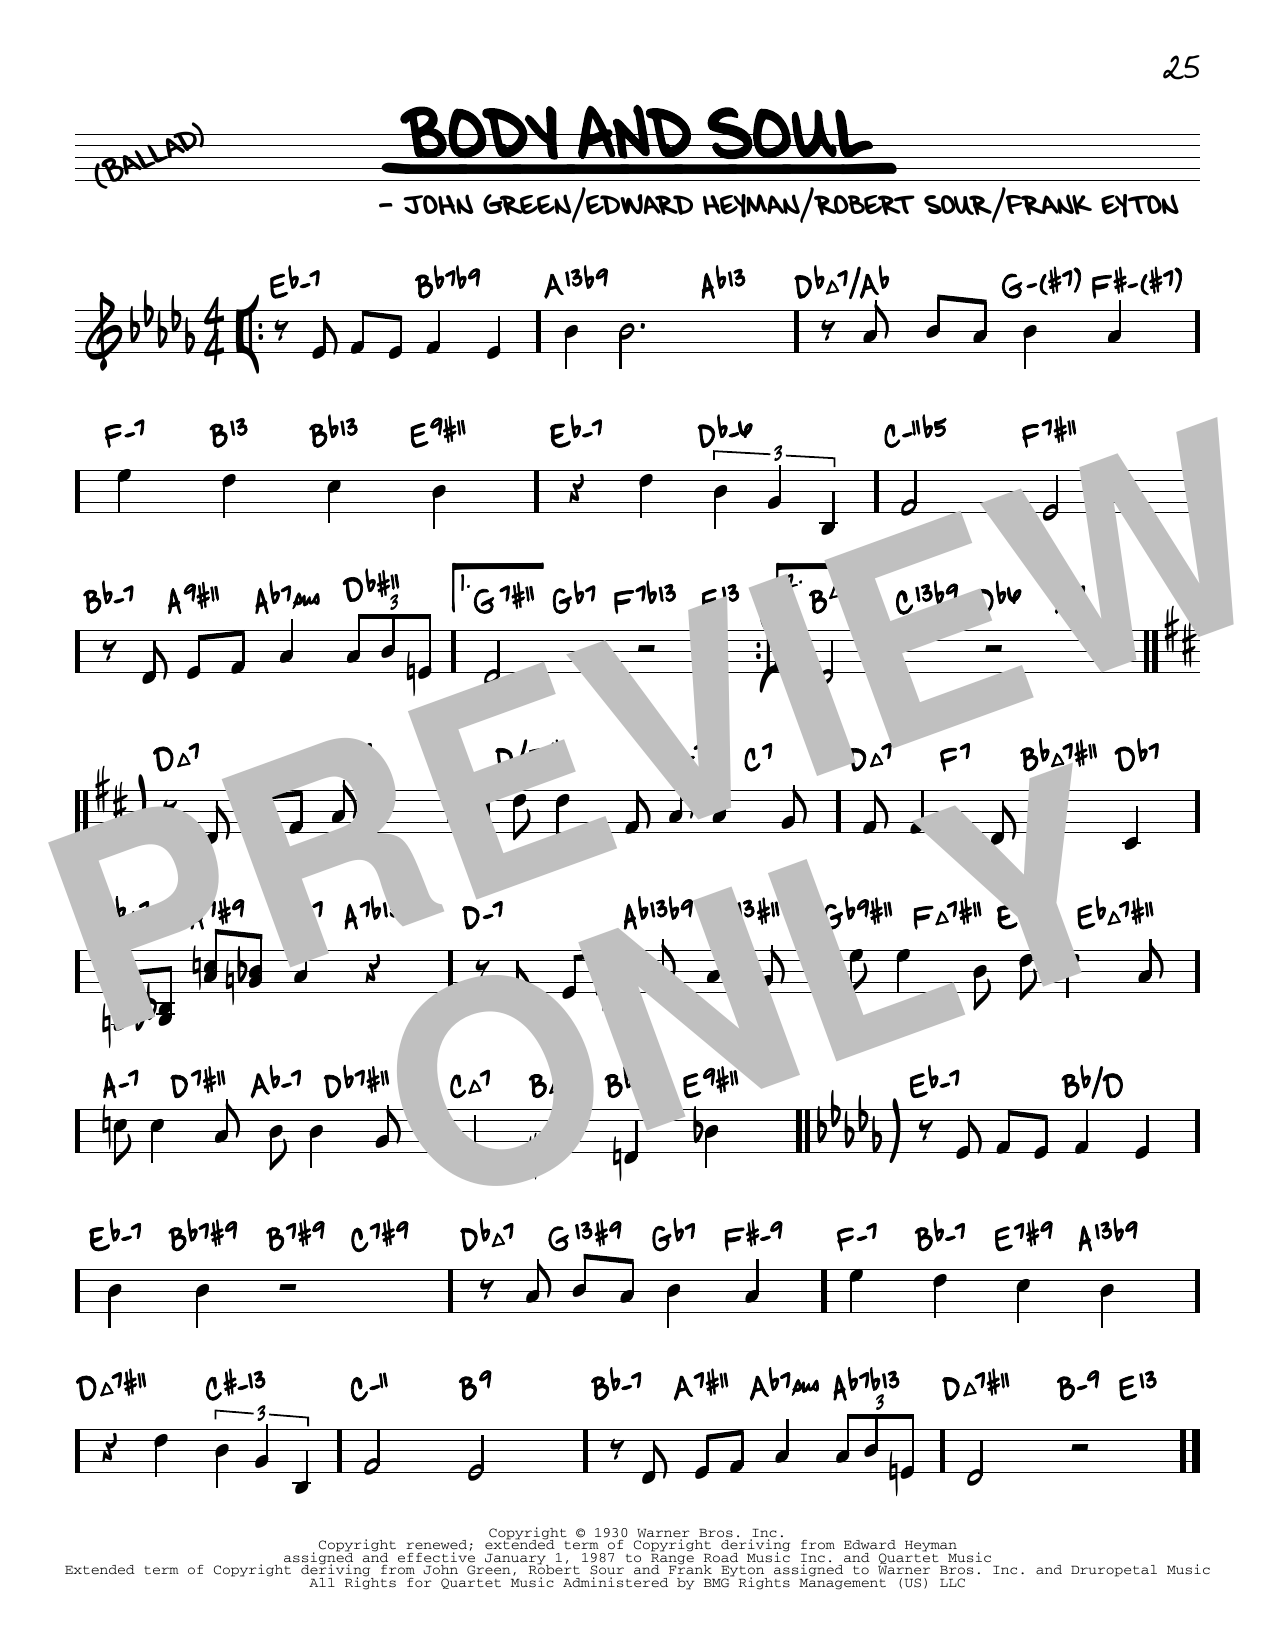 John Green Body And Soul (arr. David Hazeltine) Sheet Music Notes & Chords for Real Book – Enhanced Chords - Download or Print PDF